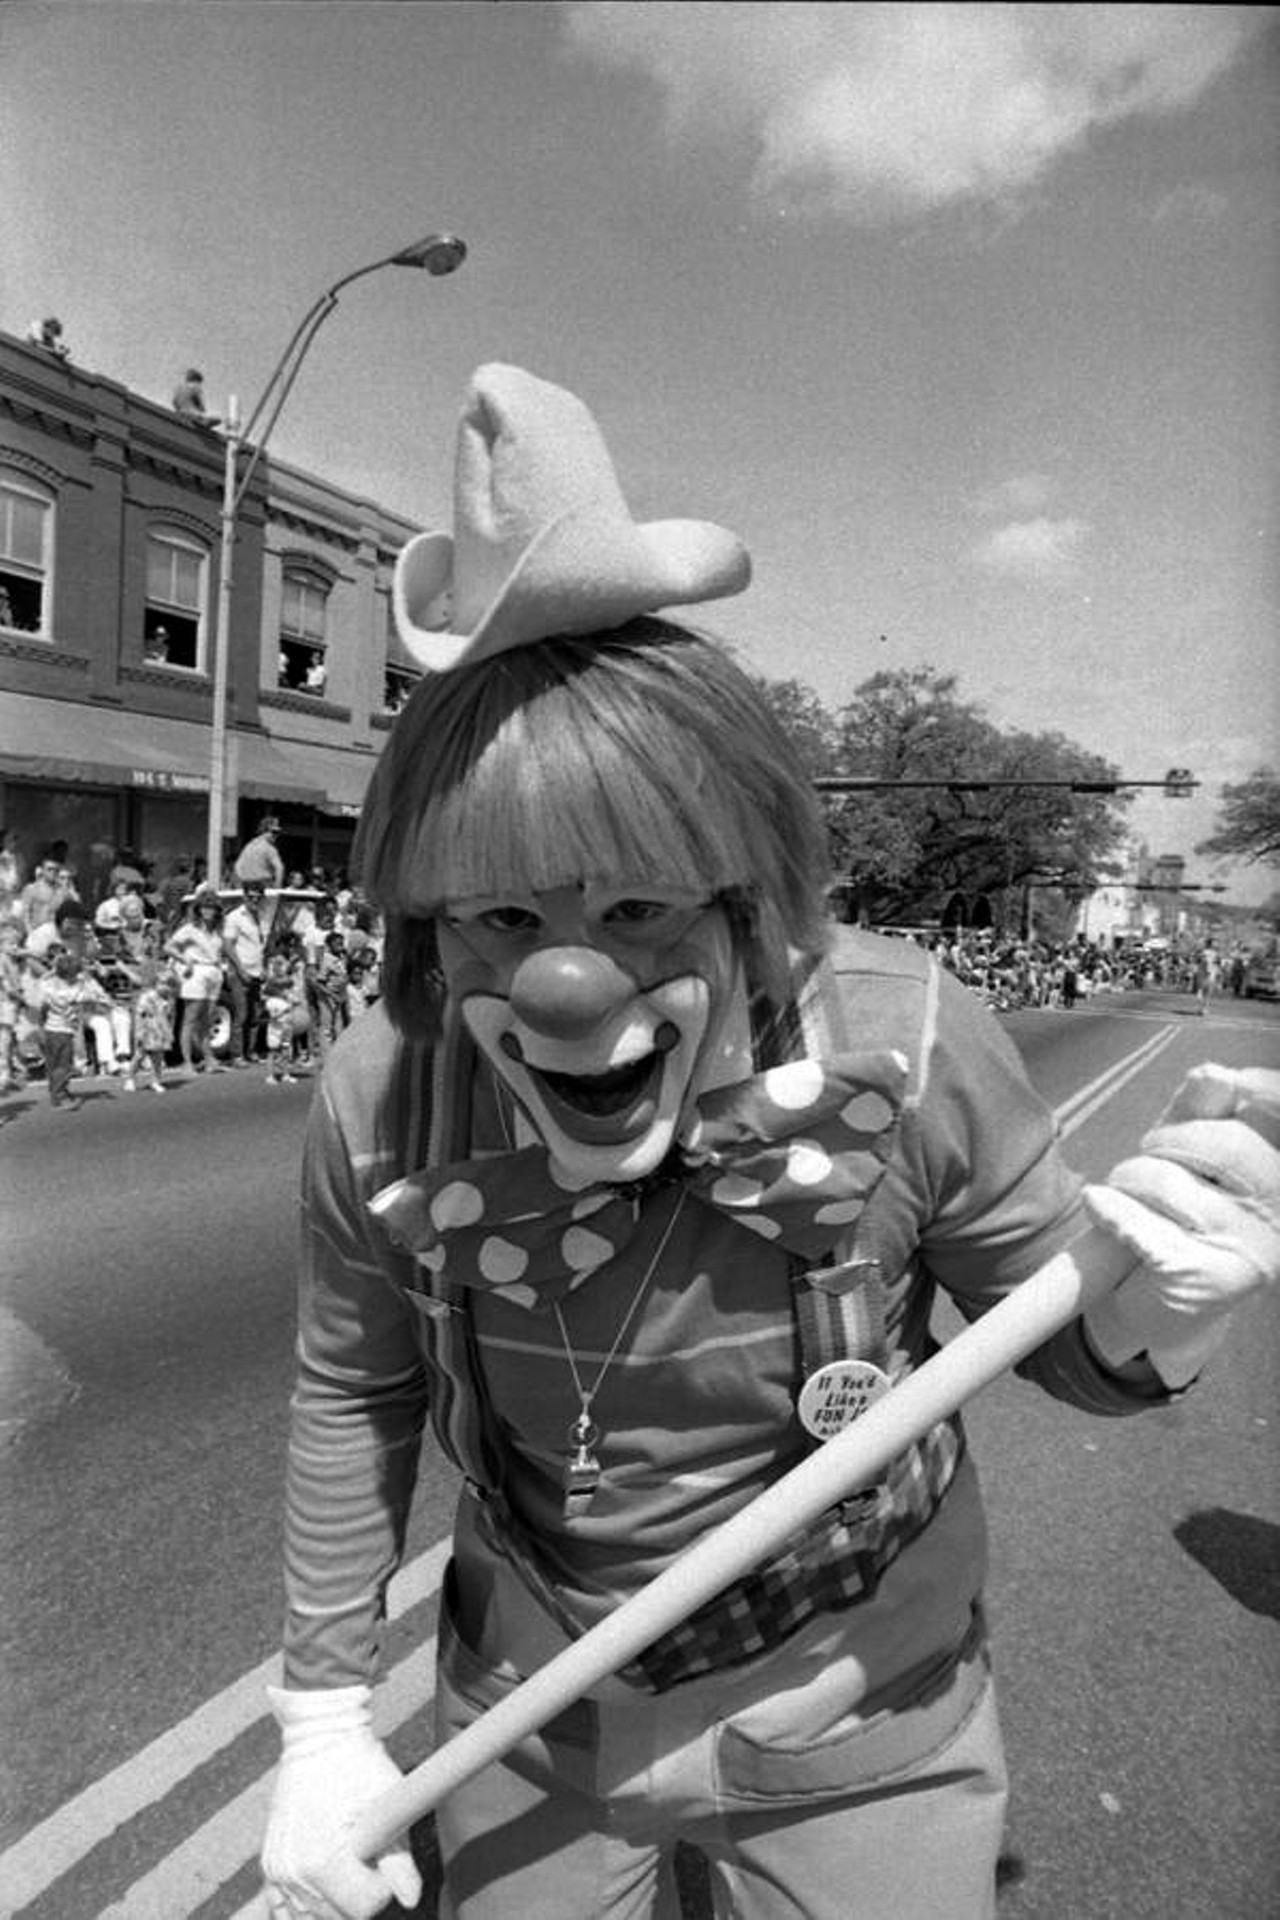 A clown at the Springtime Parade in Tallahassee, circa 1985 (via floridamemory.com)